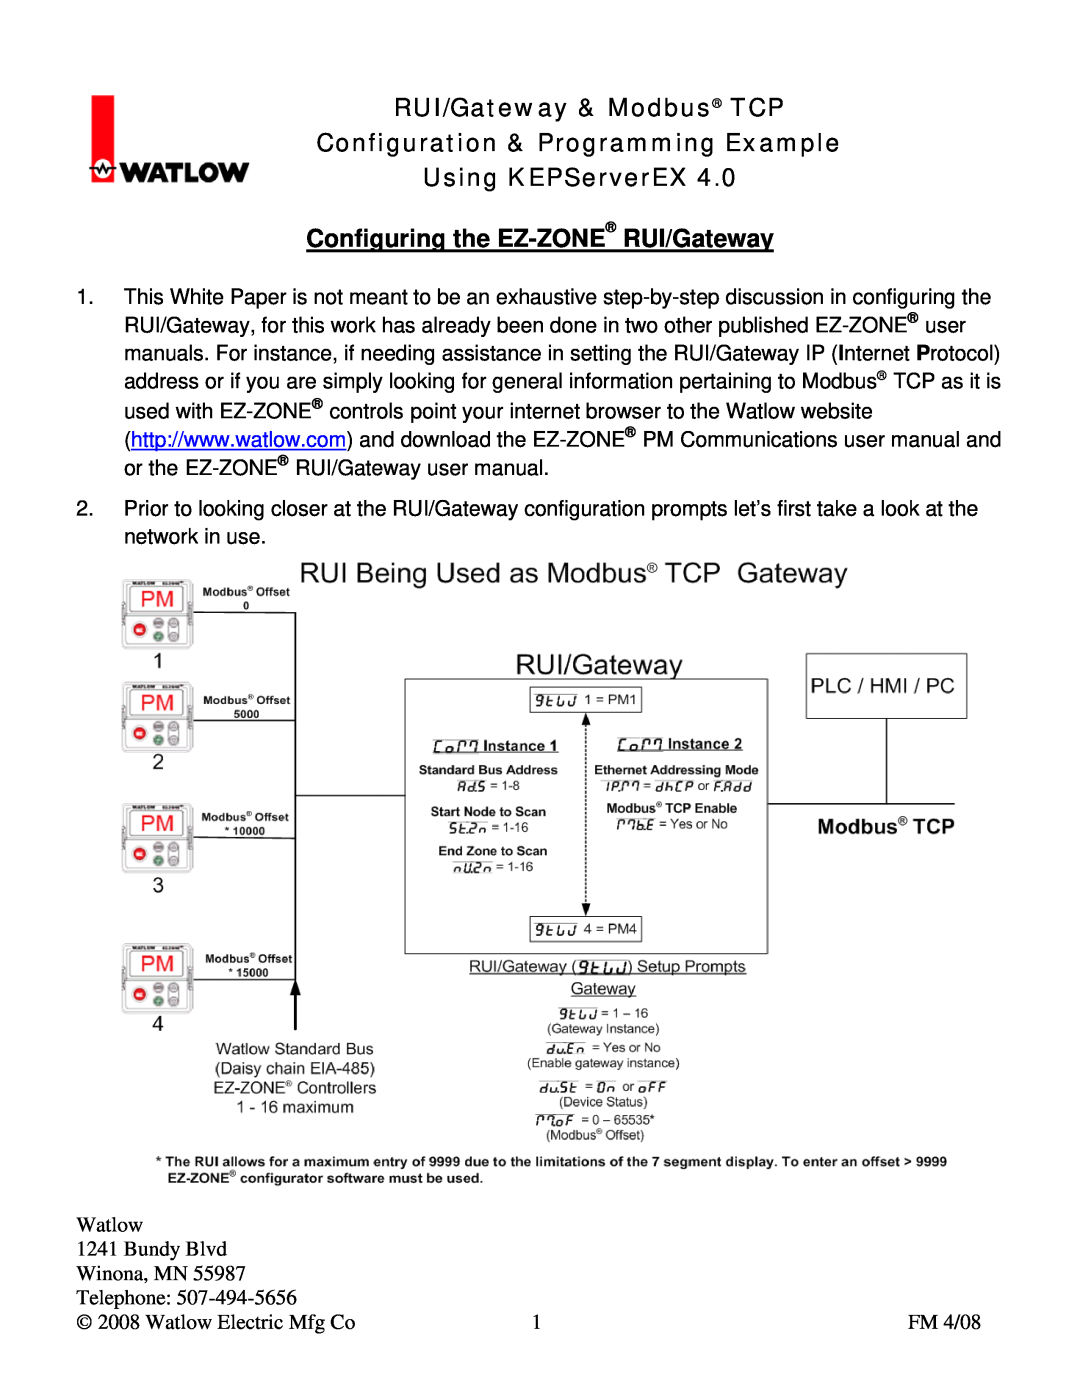 Watlow Electric user manual RUI/Gateway & Modbus TCP Configuration & Programming Example, Watlow, Bundy Blvd, Telephone 